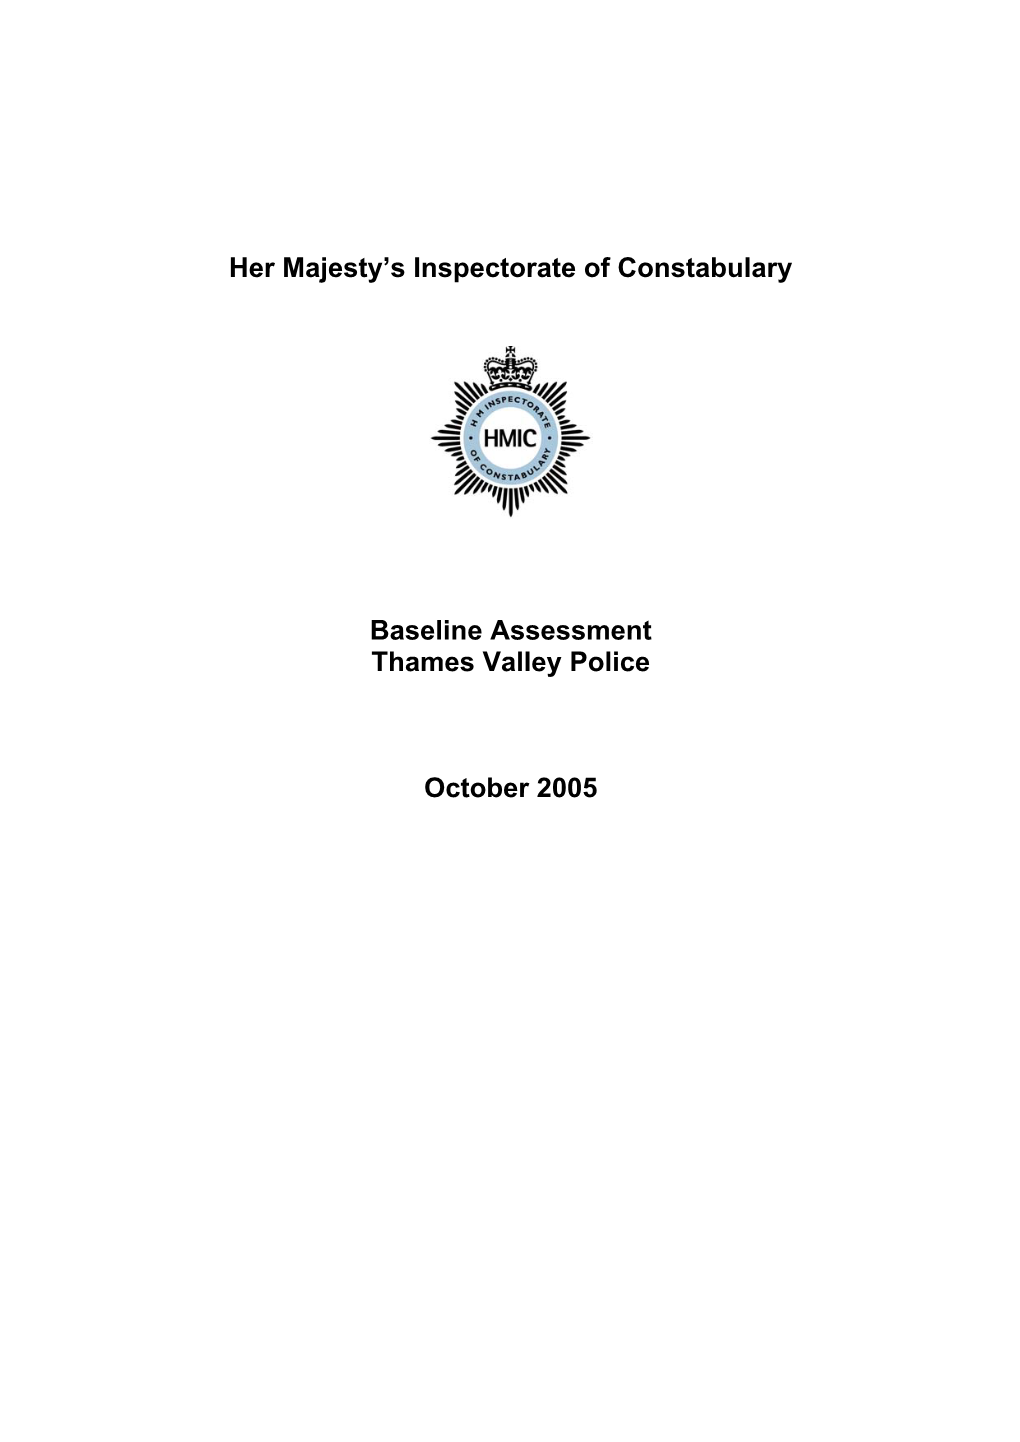 Thames Valley Baseline Assessment 2005